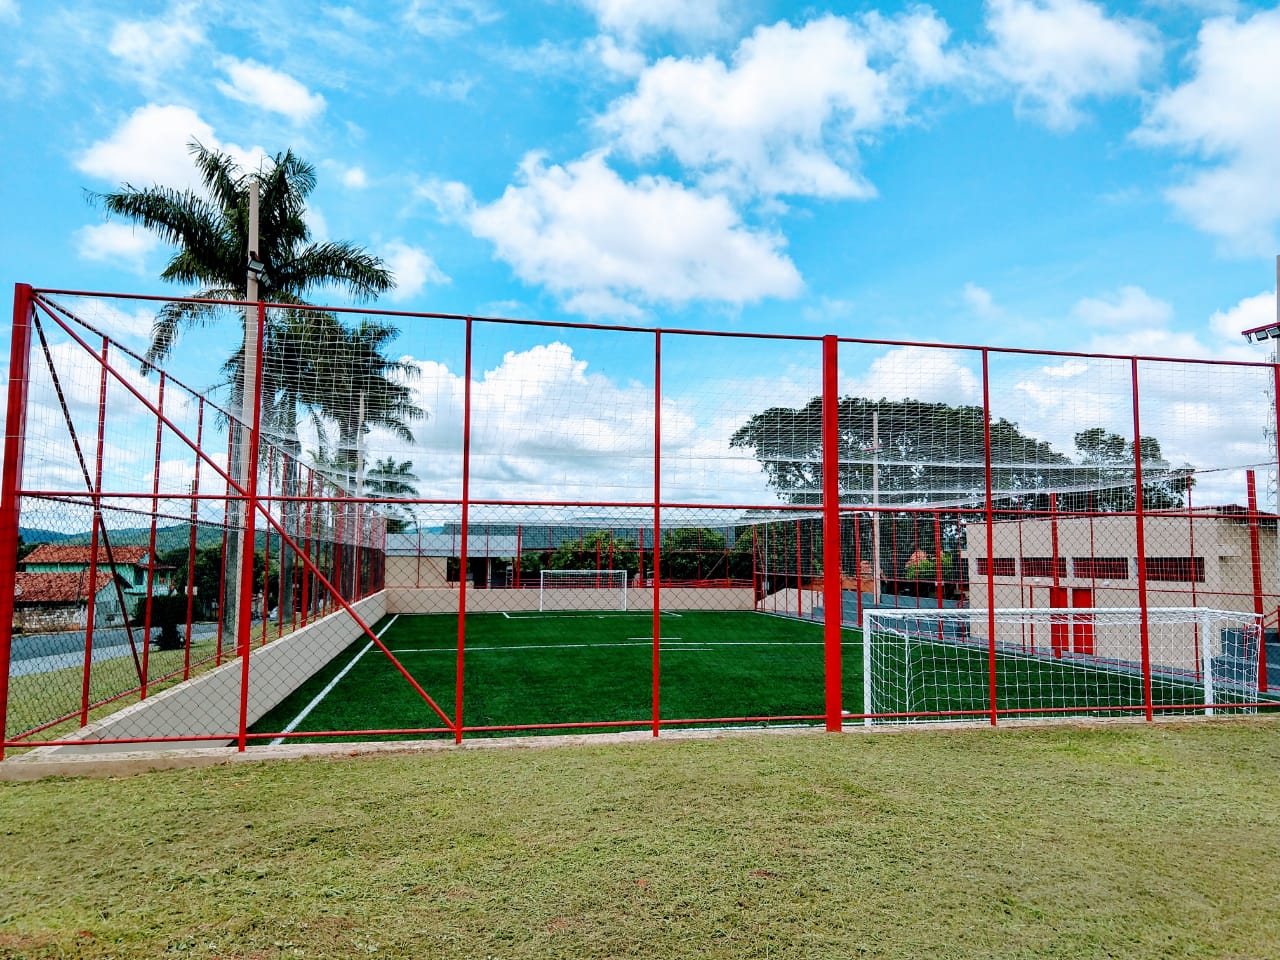 Campo de Futebol Society Leonardo Araújo Dias totalmente reconstruído (Sdnews)